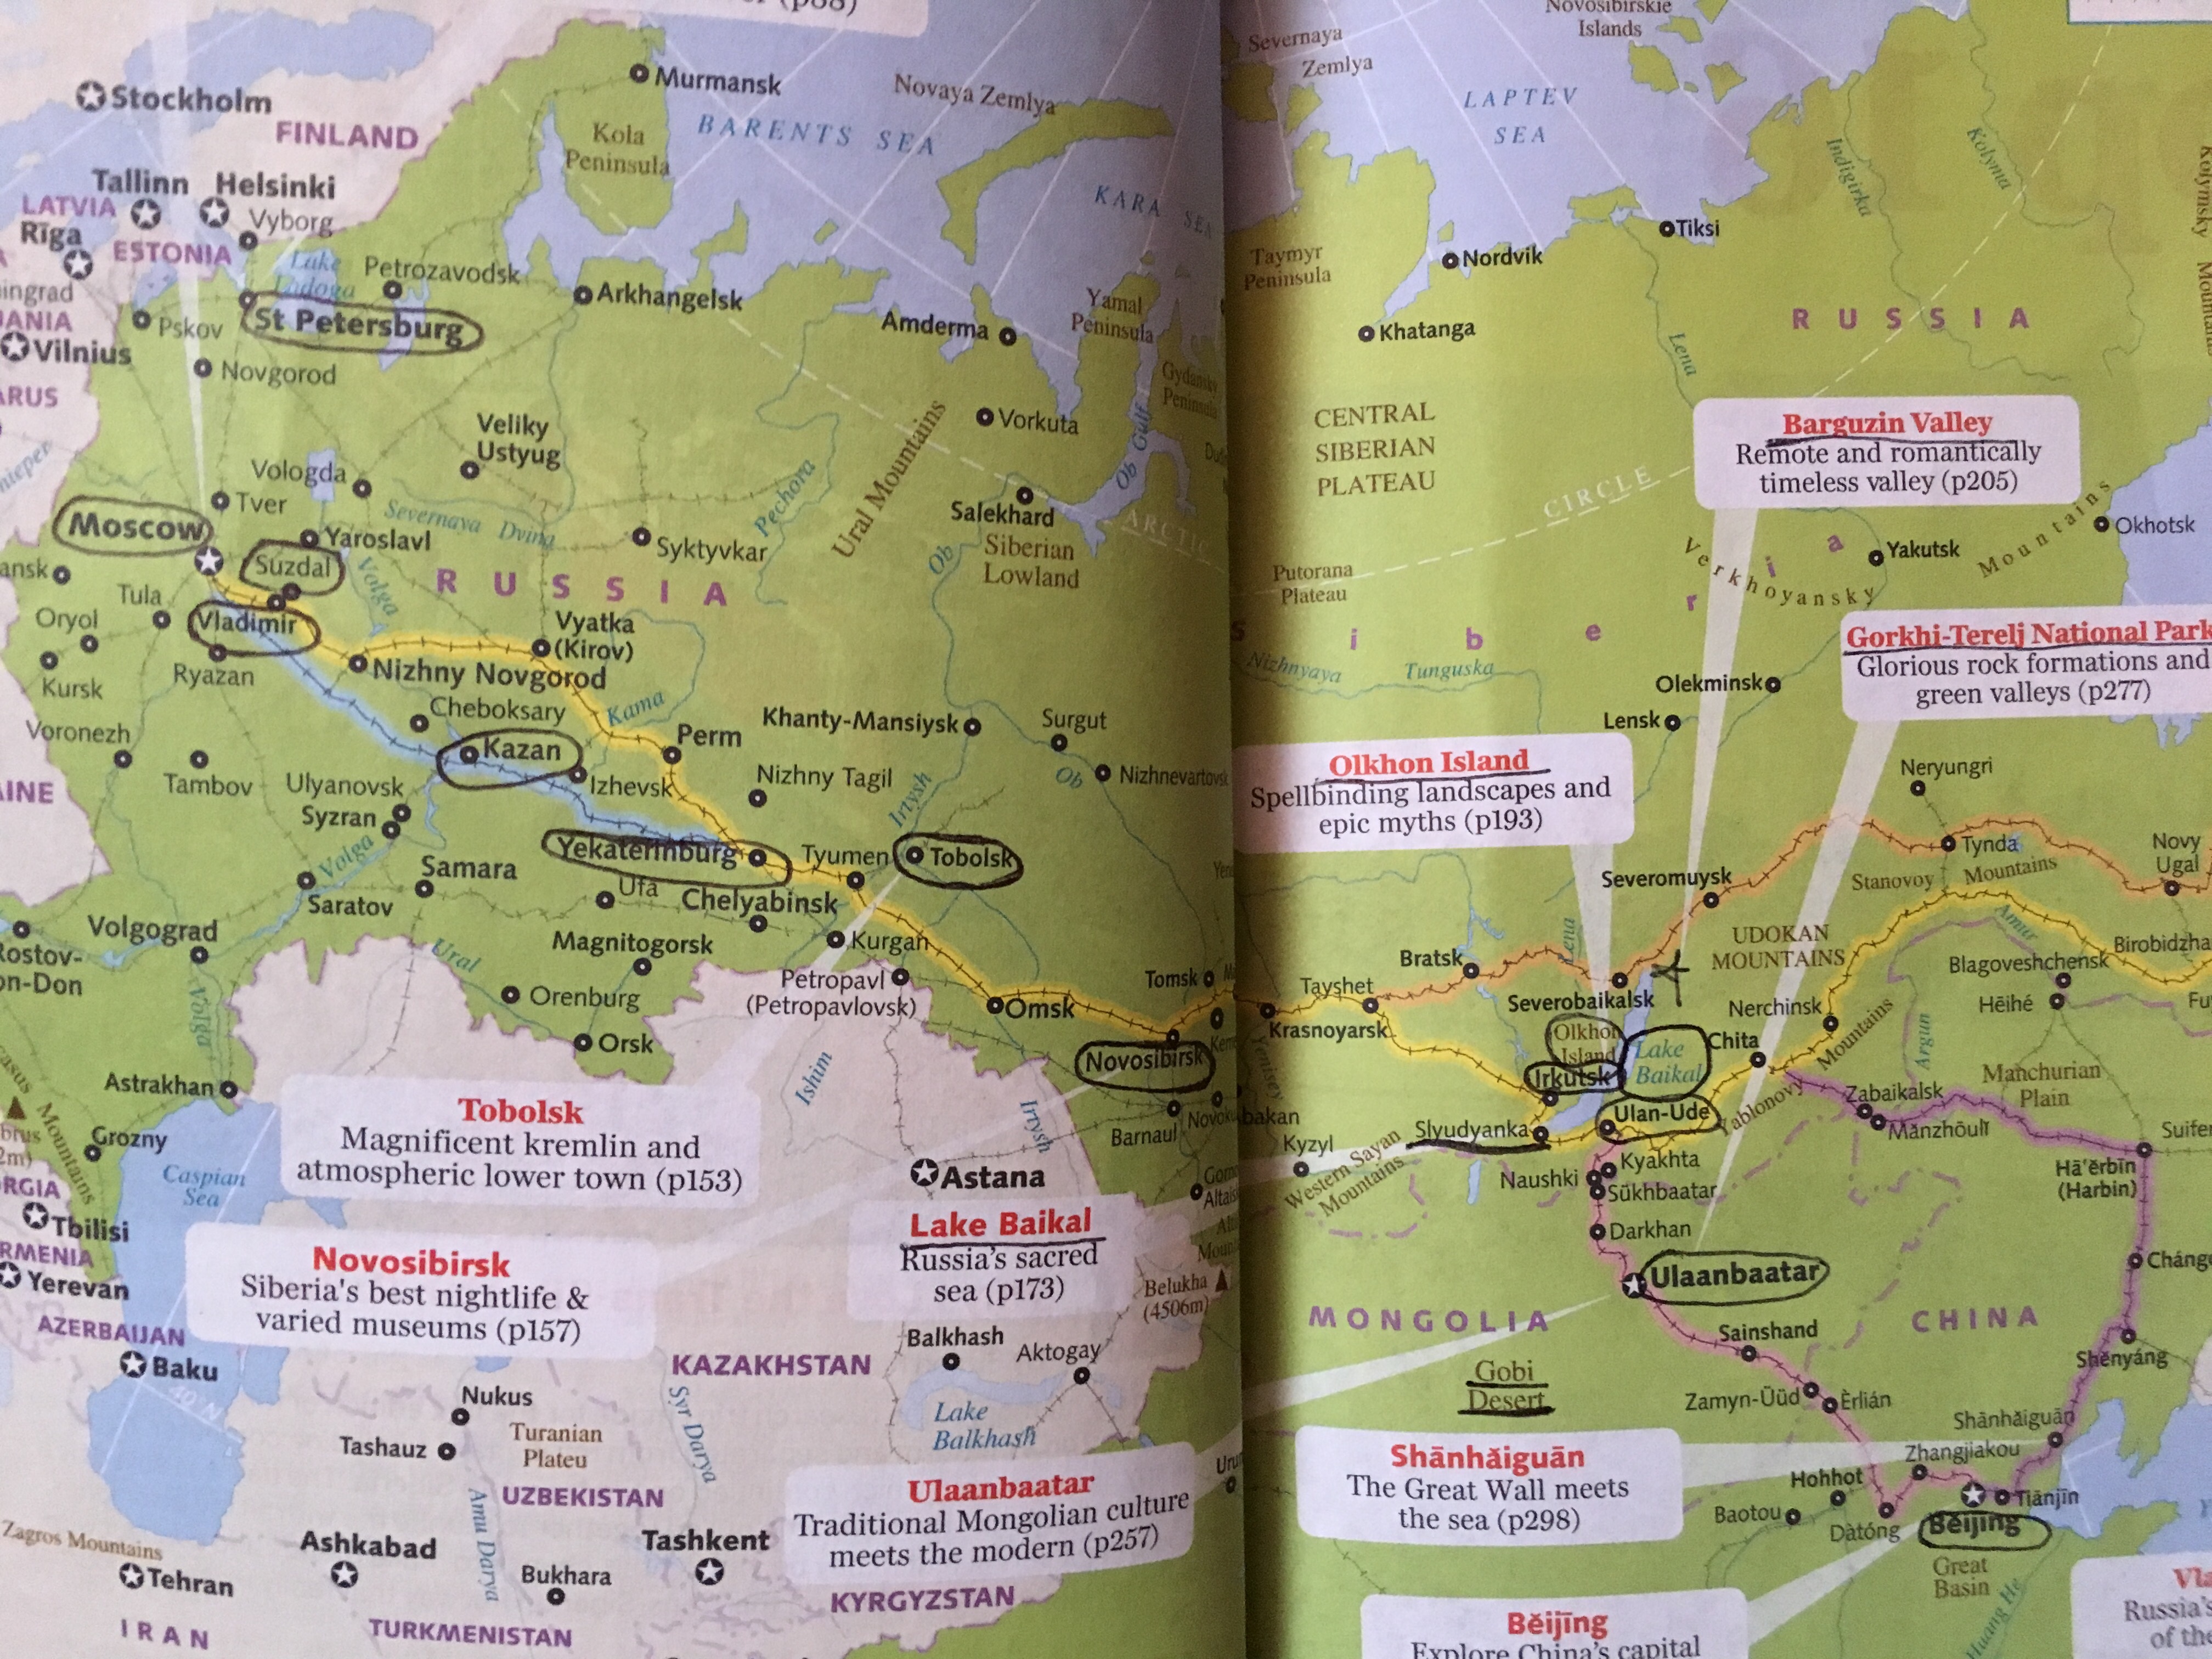 How to Plan a Tans-Siberian Railway Trip